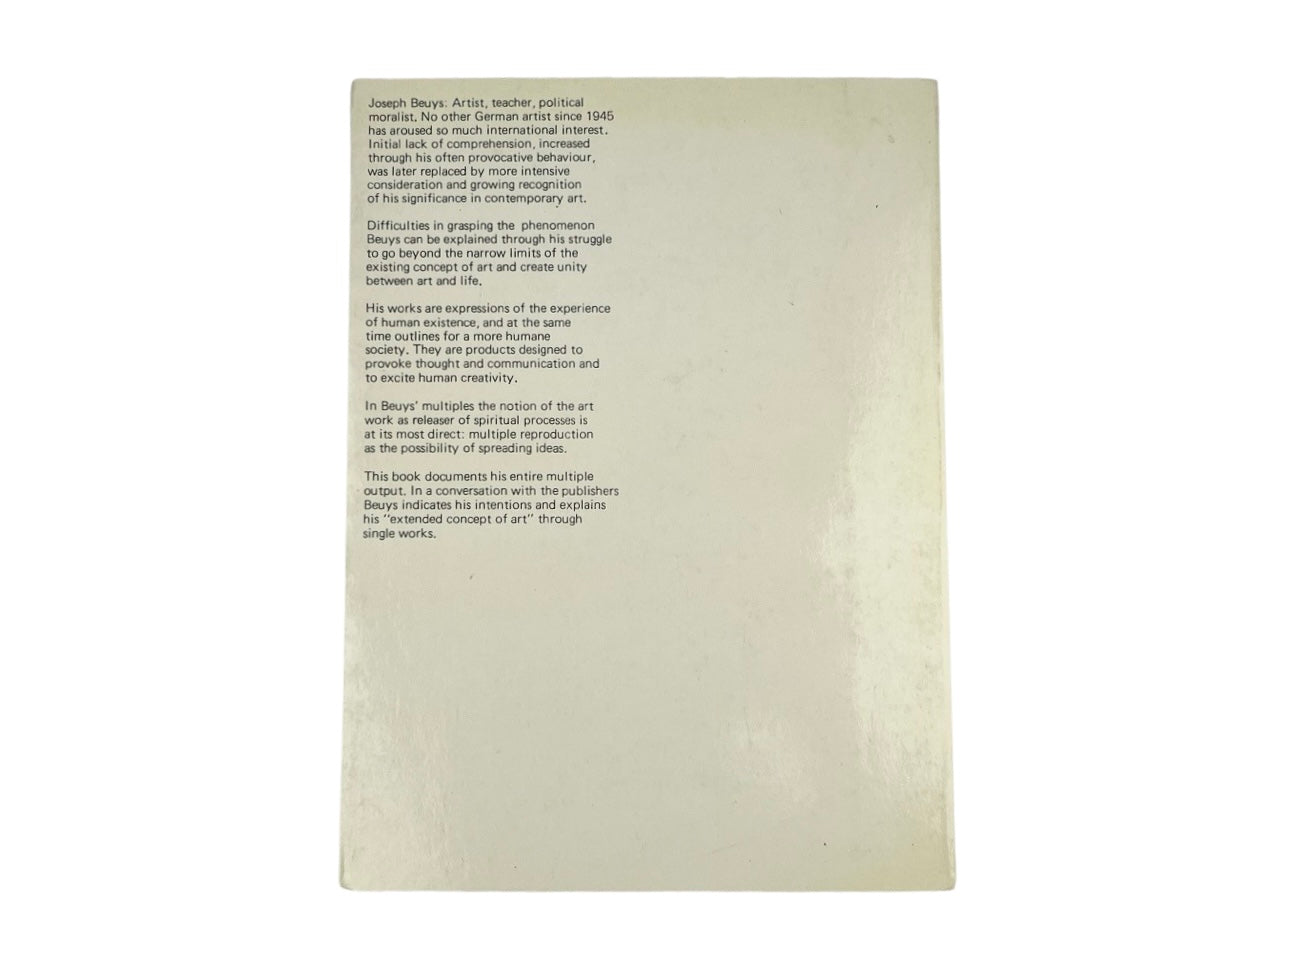 Joseph Beuys ‘Multiples’ Book